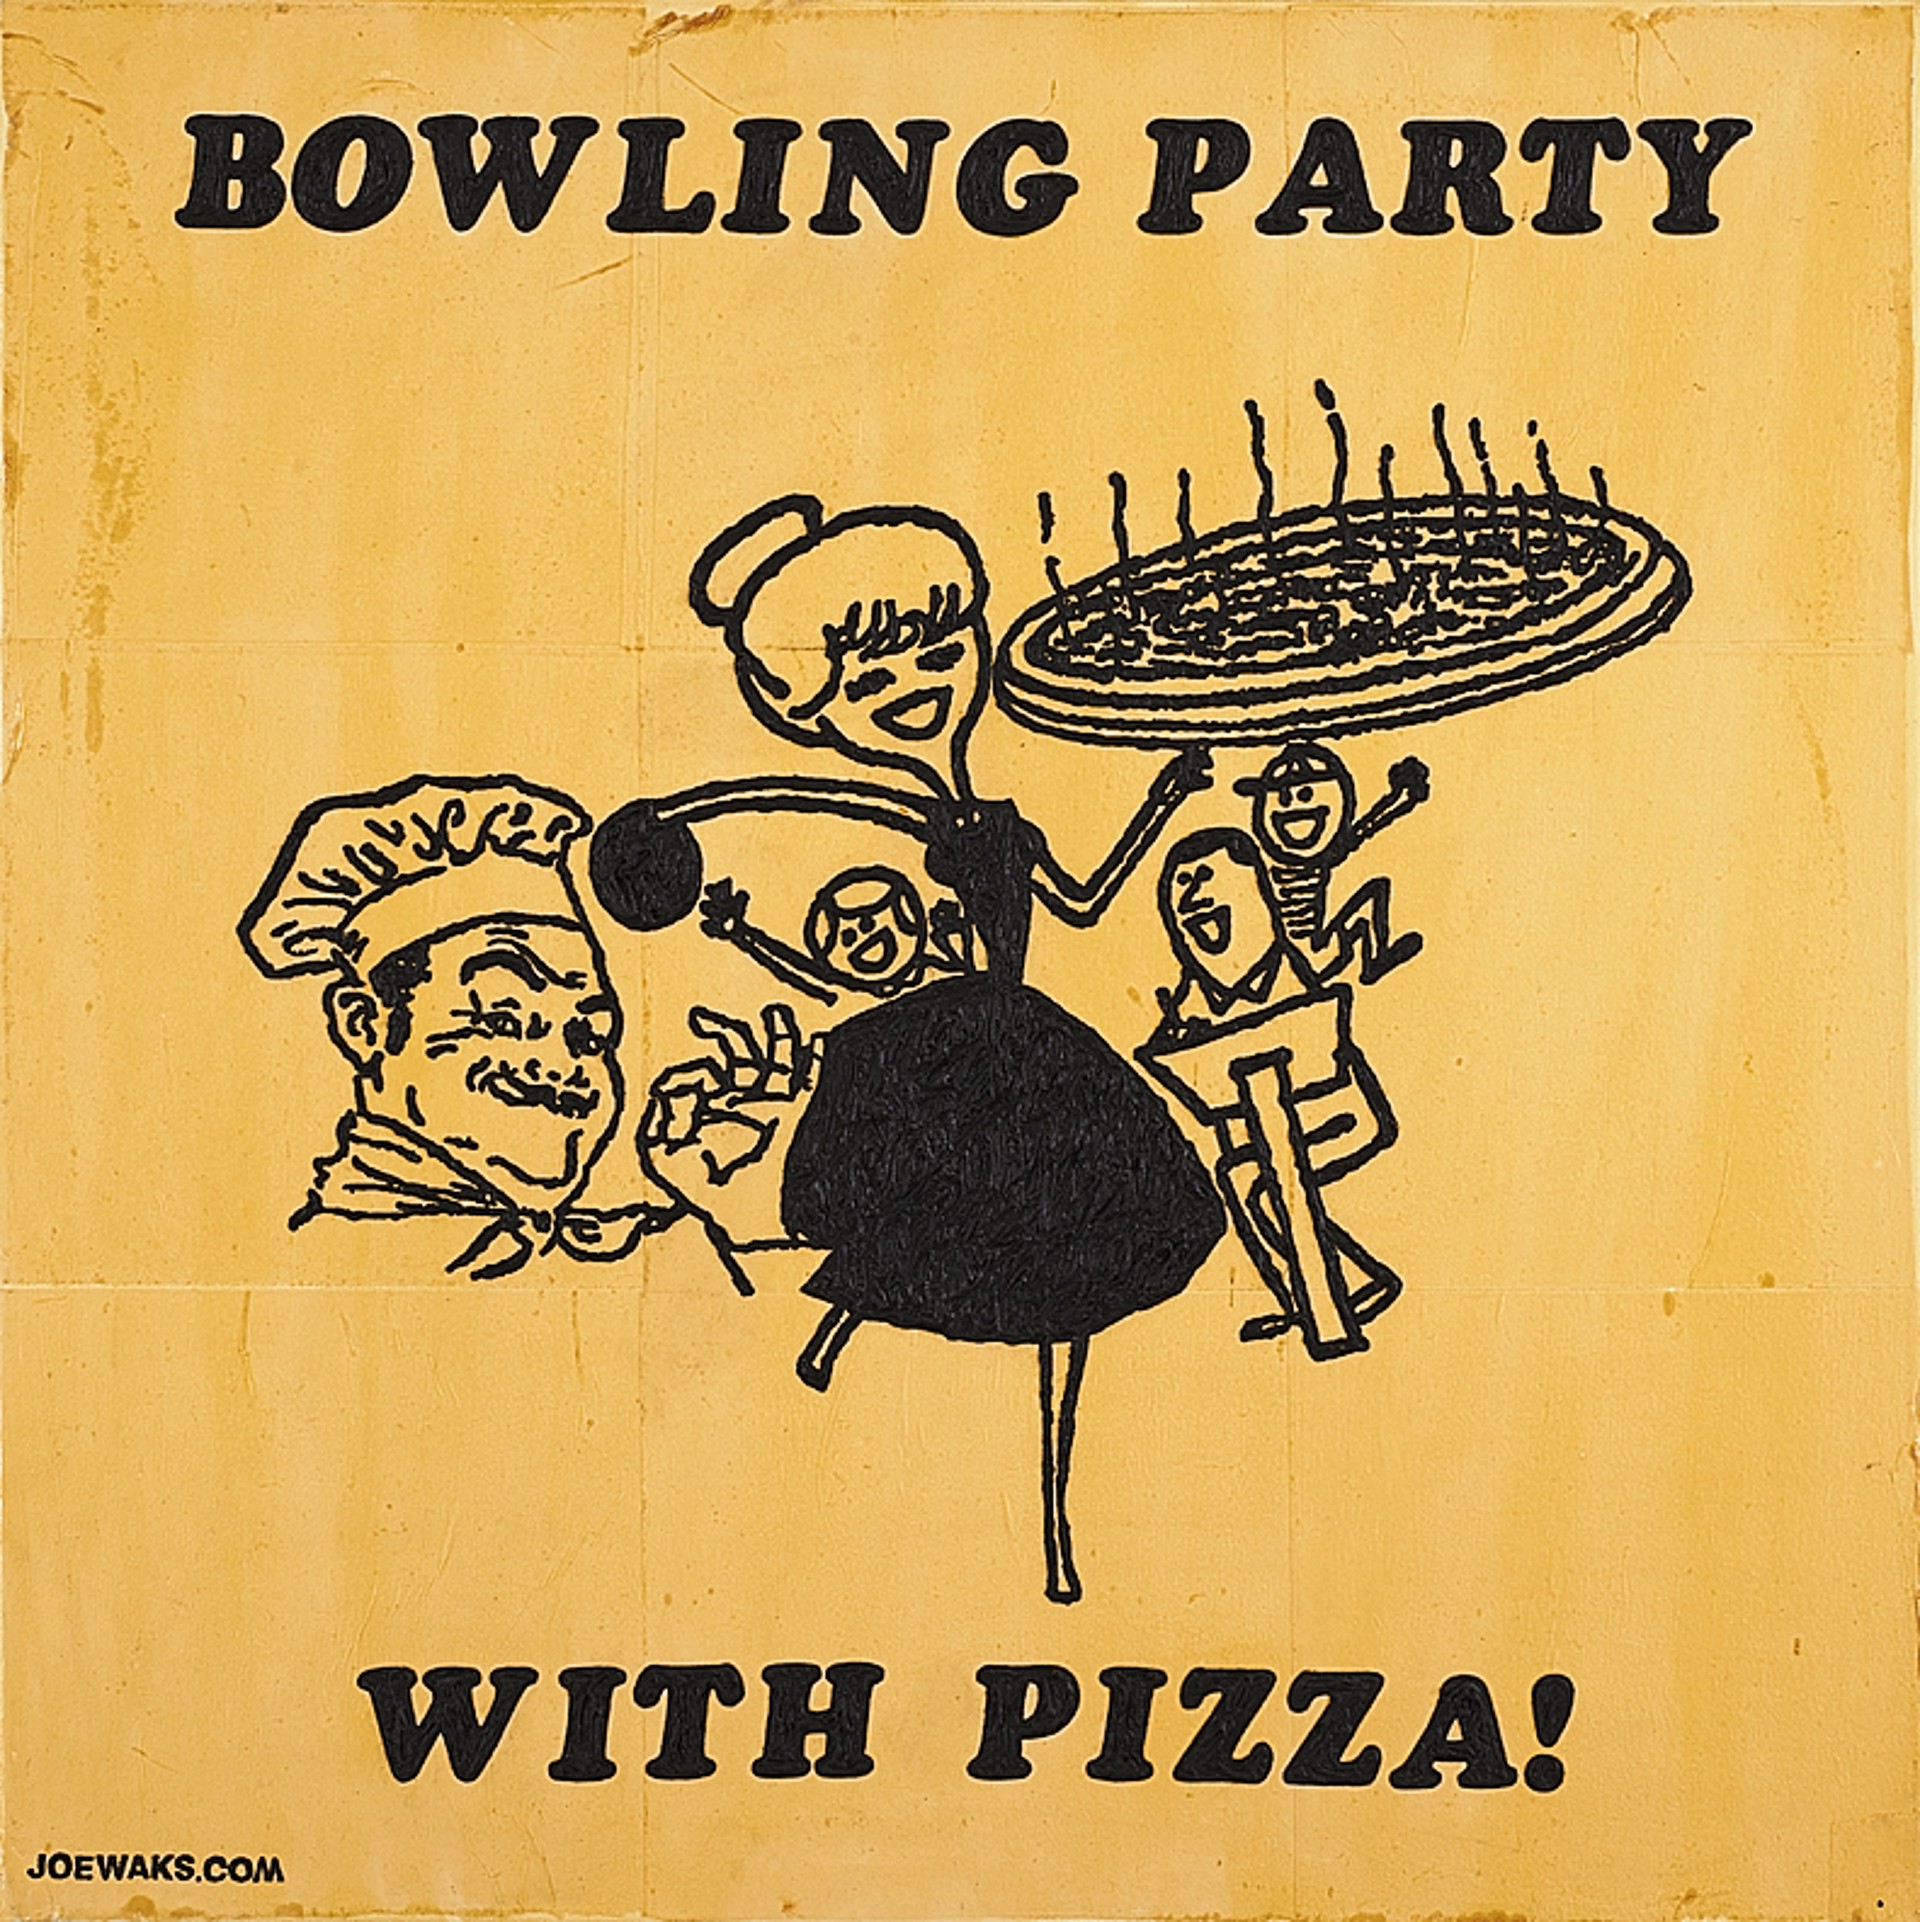 Bowling Party by Joe Waks